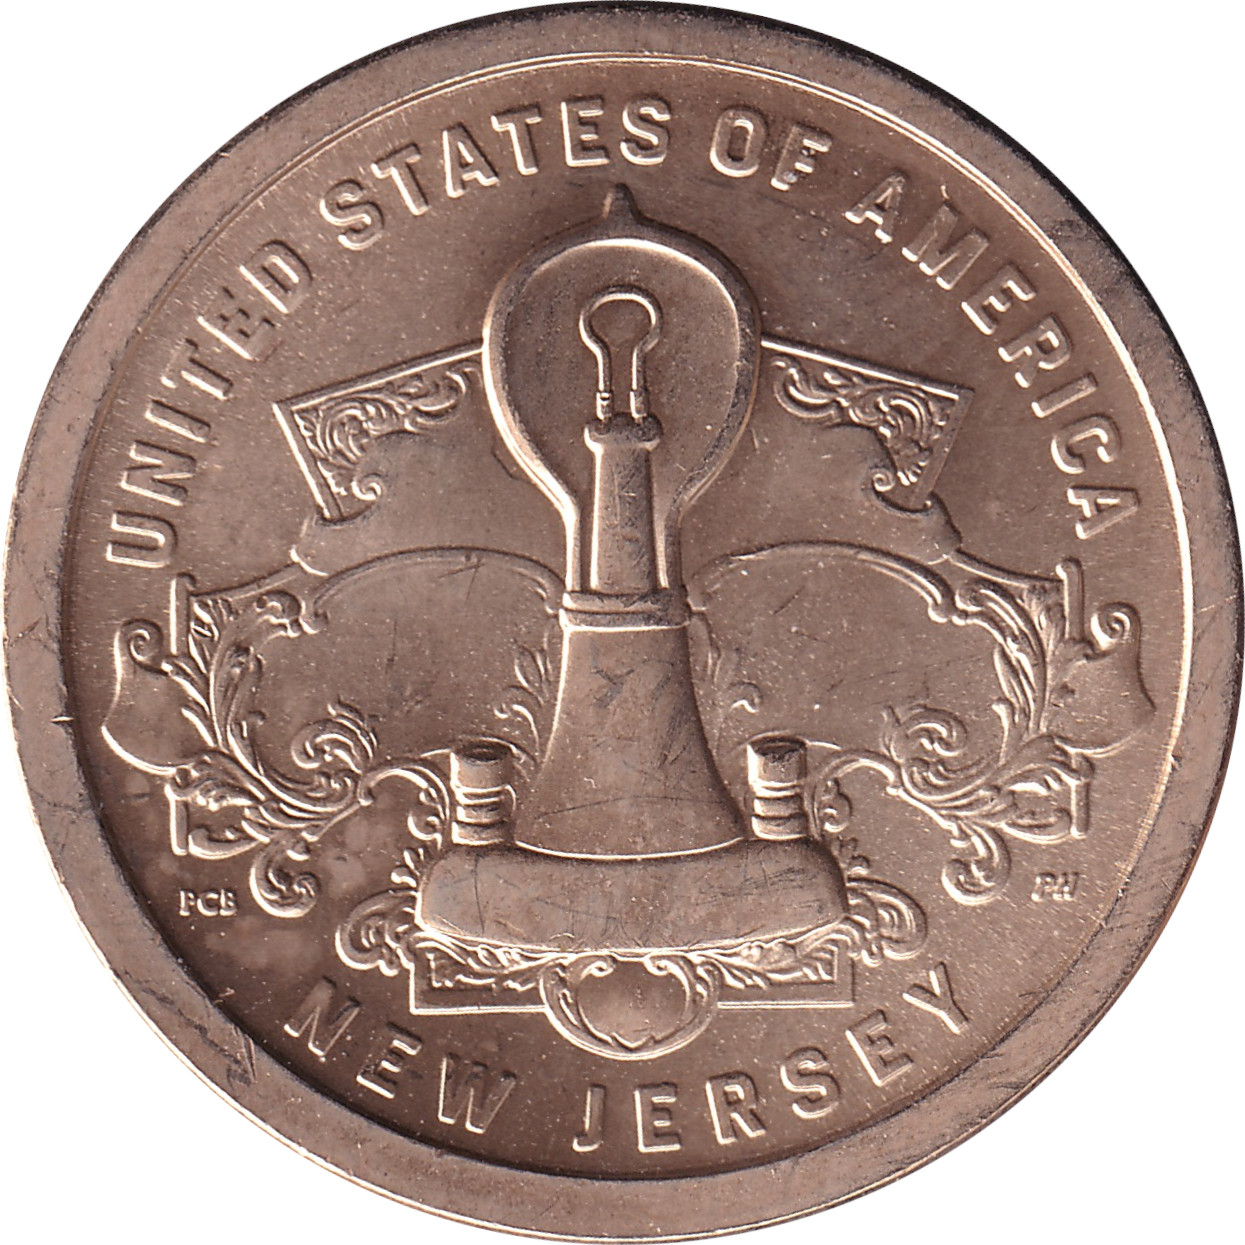 1 dollar - New Jersey